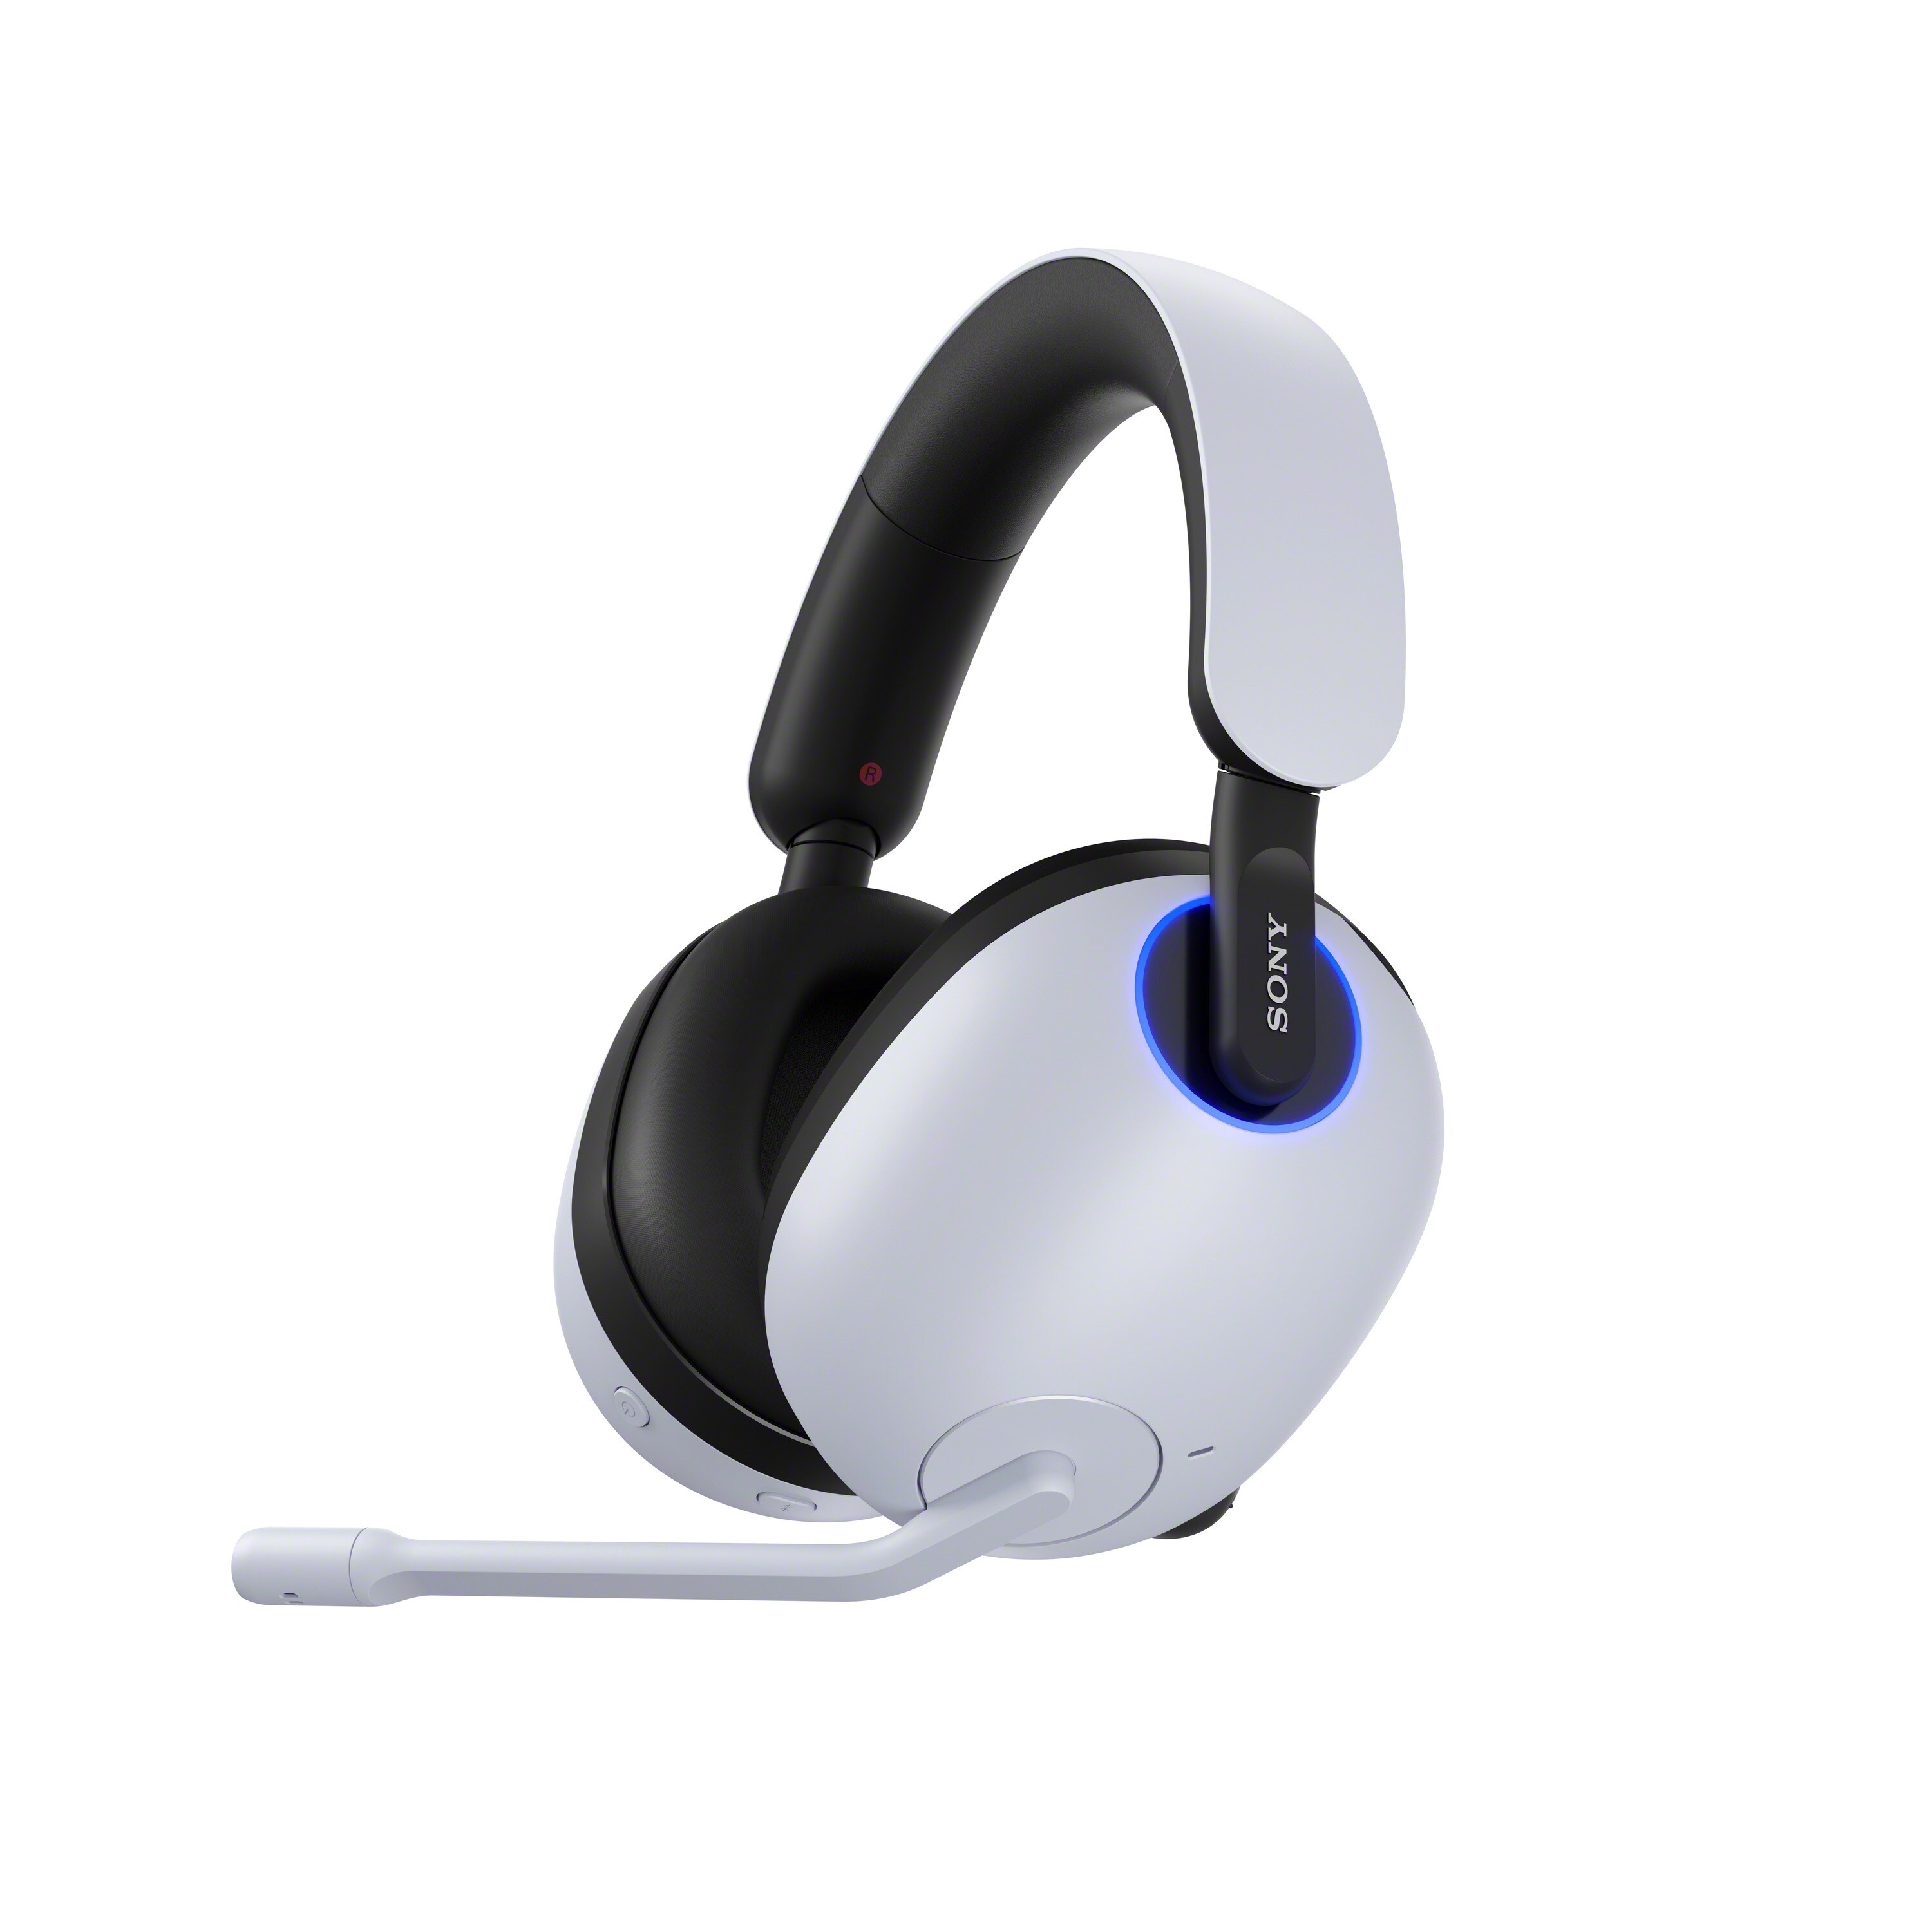 Sony Inzone H9 trådløst støjreducerende gaming headset